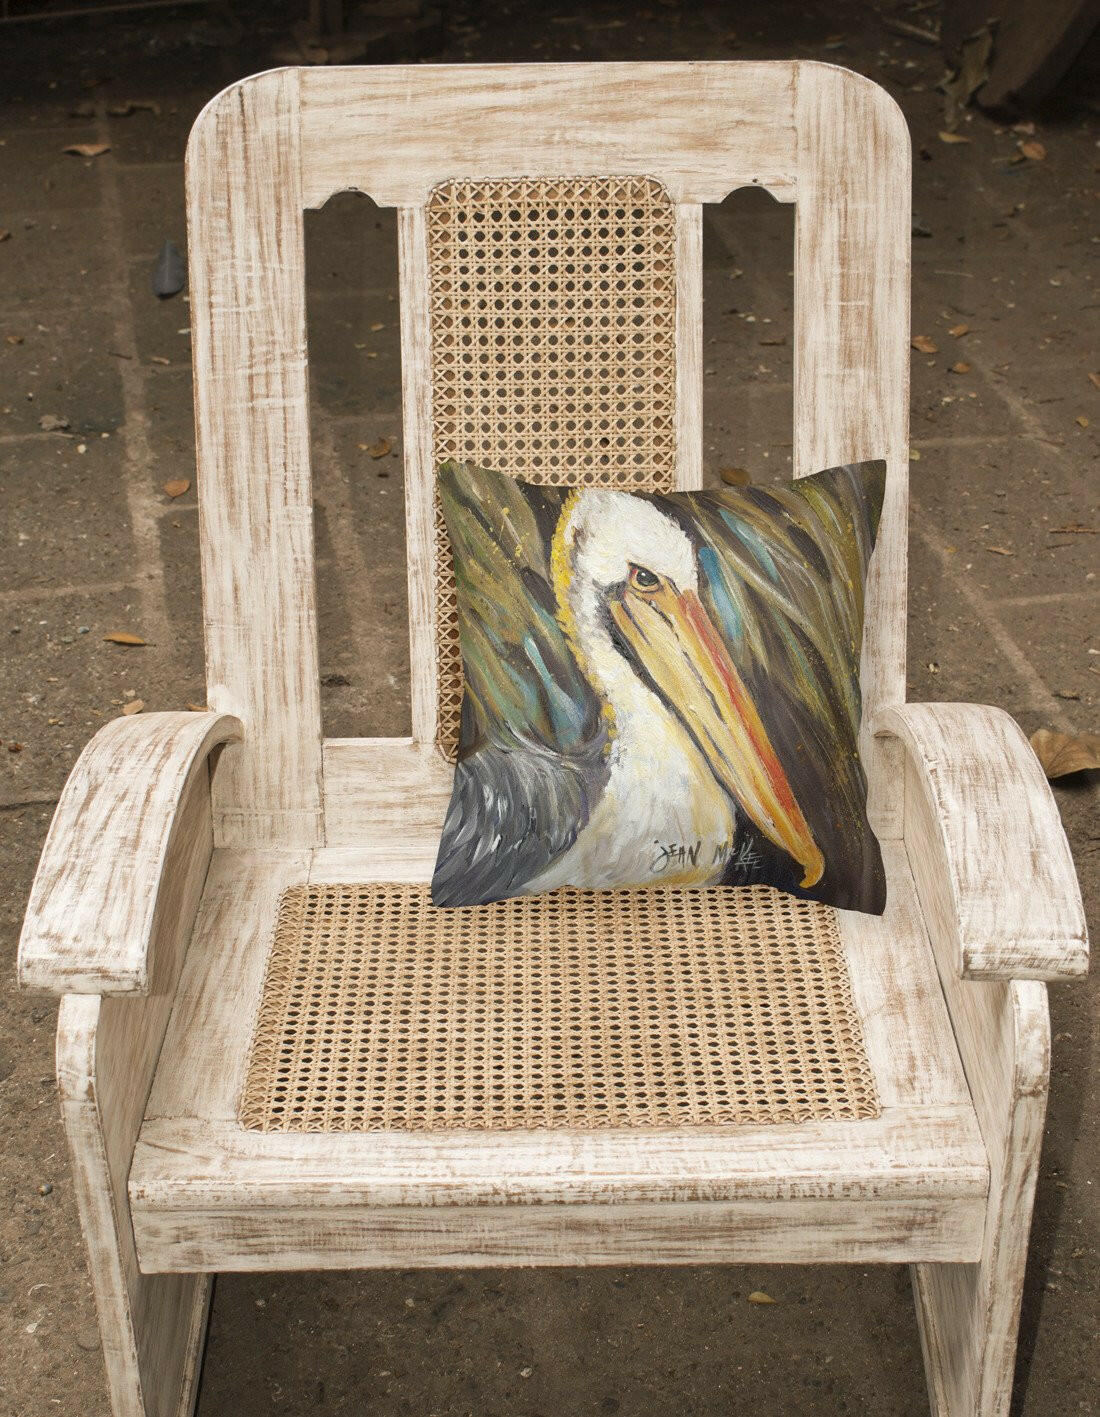 Pelican lookin West Canvas Fabric Decorative Pillow JMK1216PW1414 by Caroline's Treasures